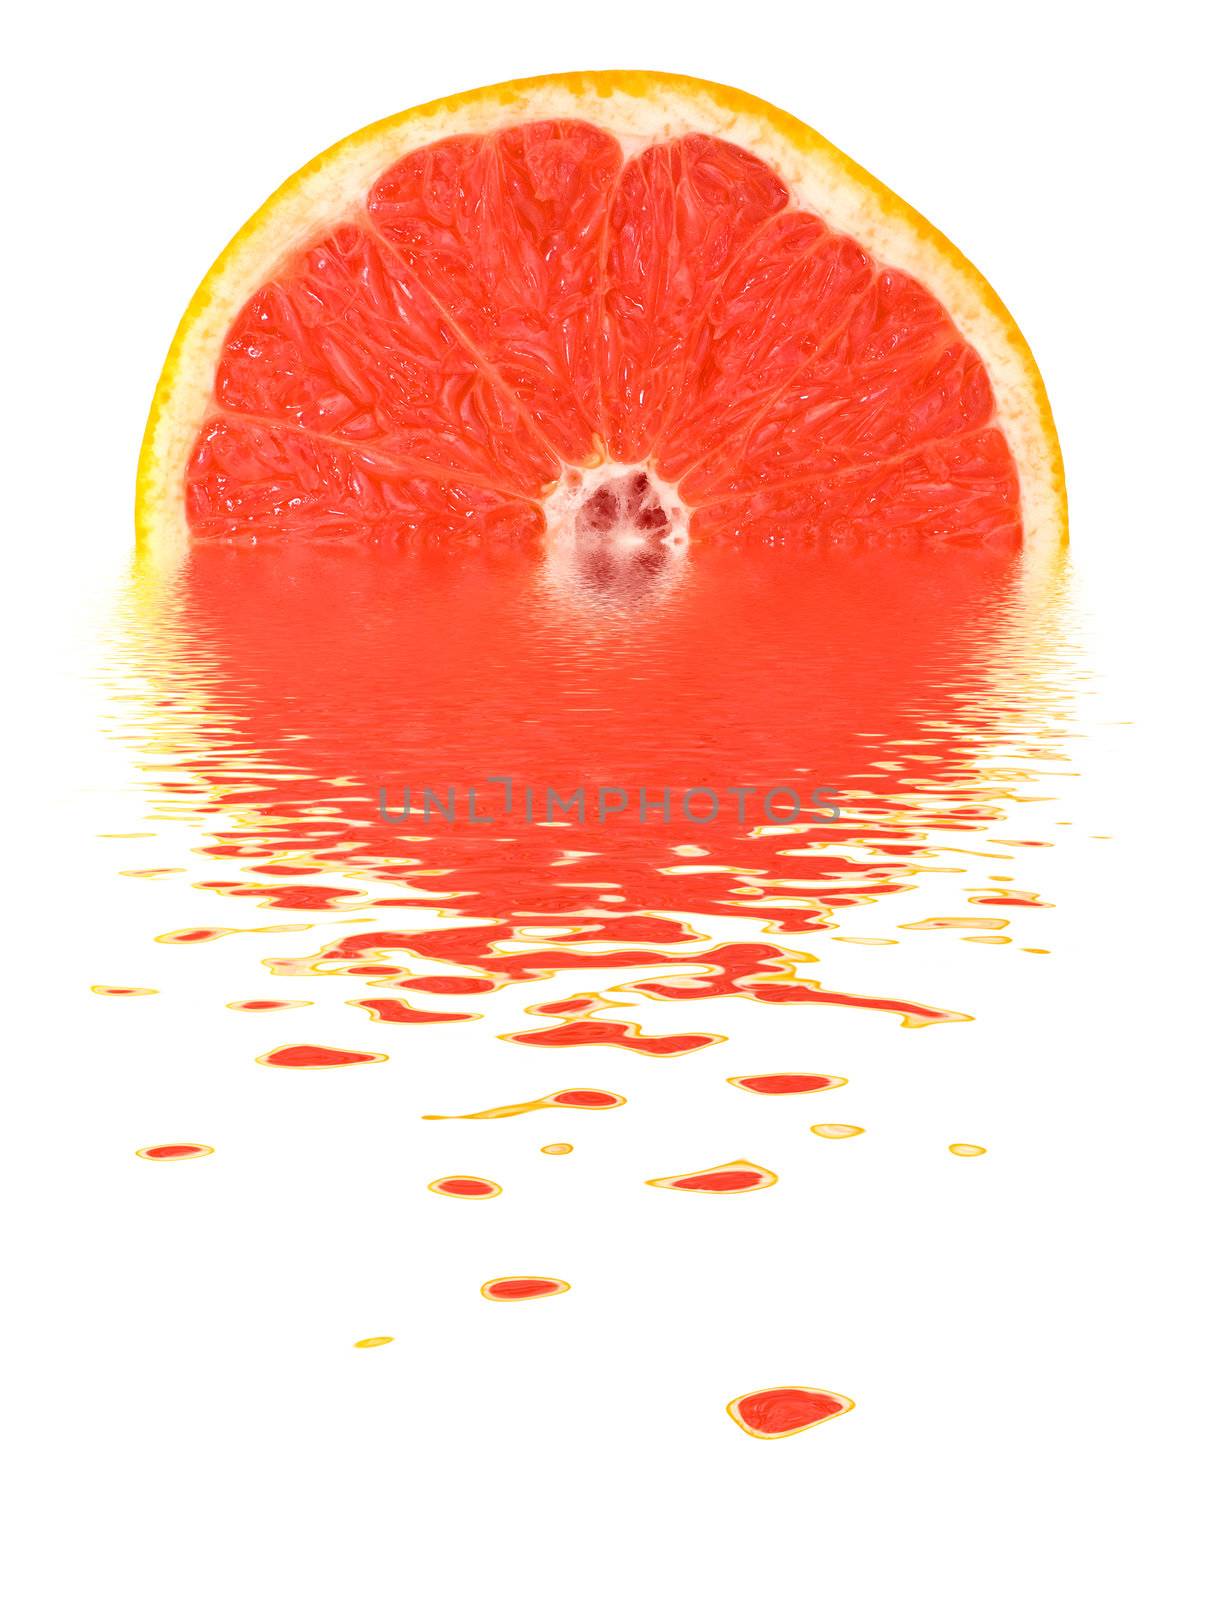 Fresh grapefruit on water. Isolated.